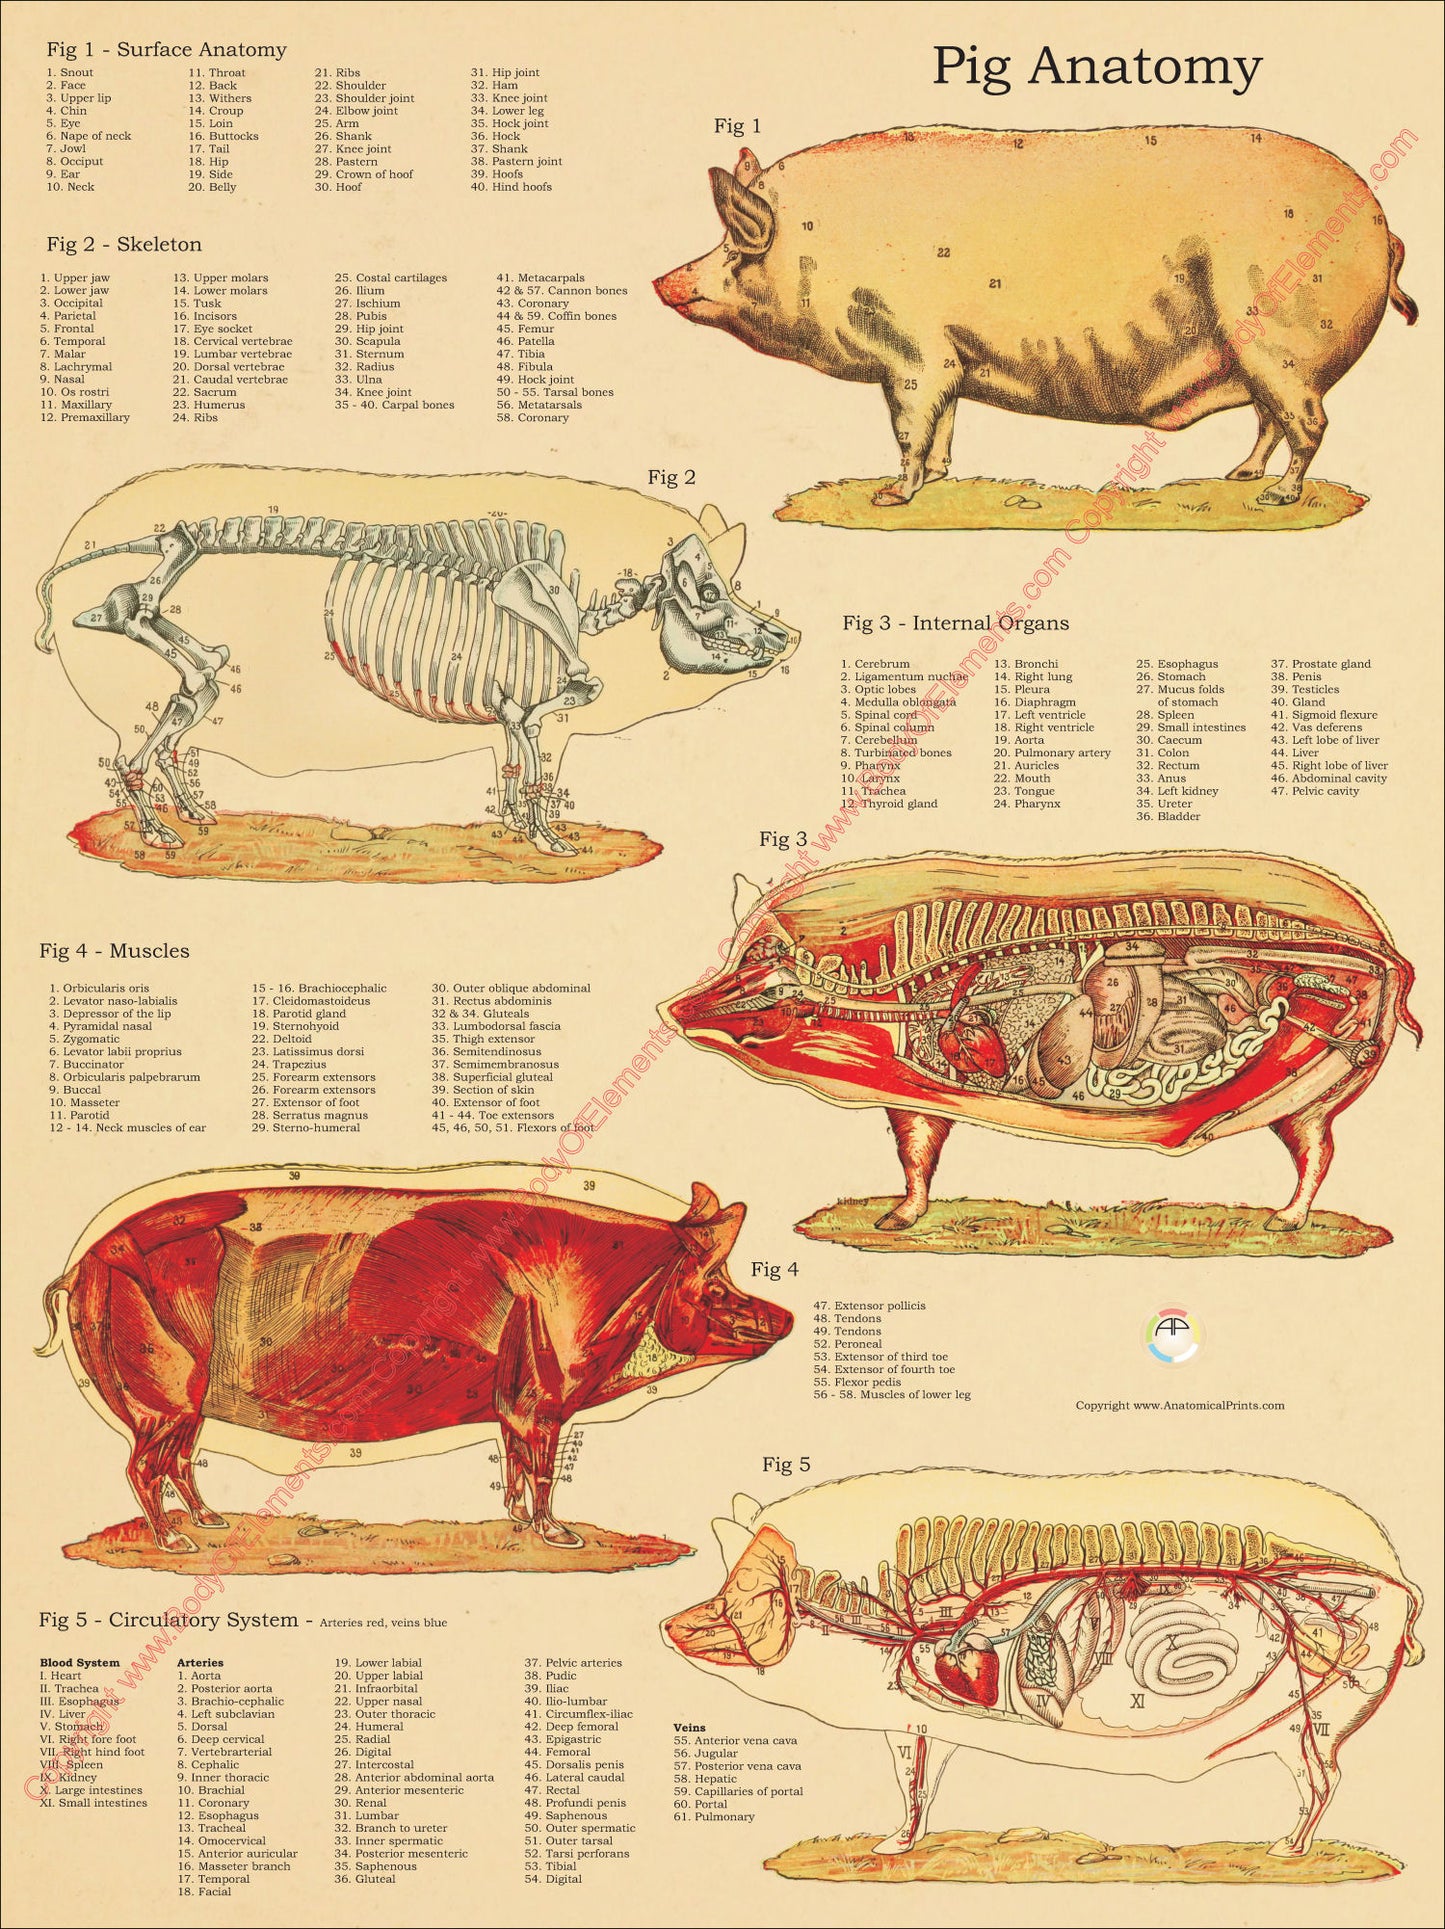 Pig Anatomy Atlas Poster